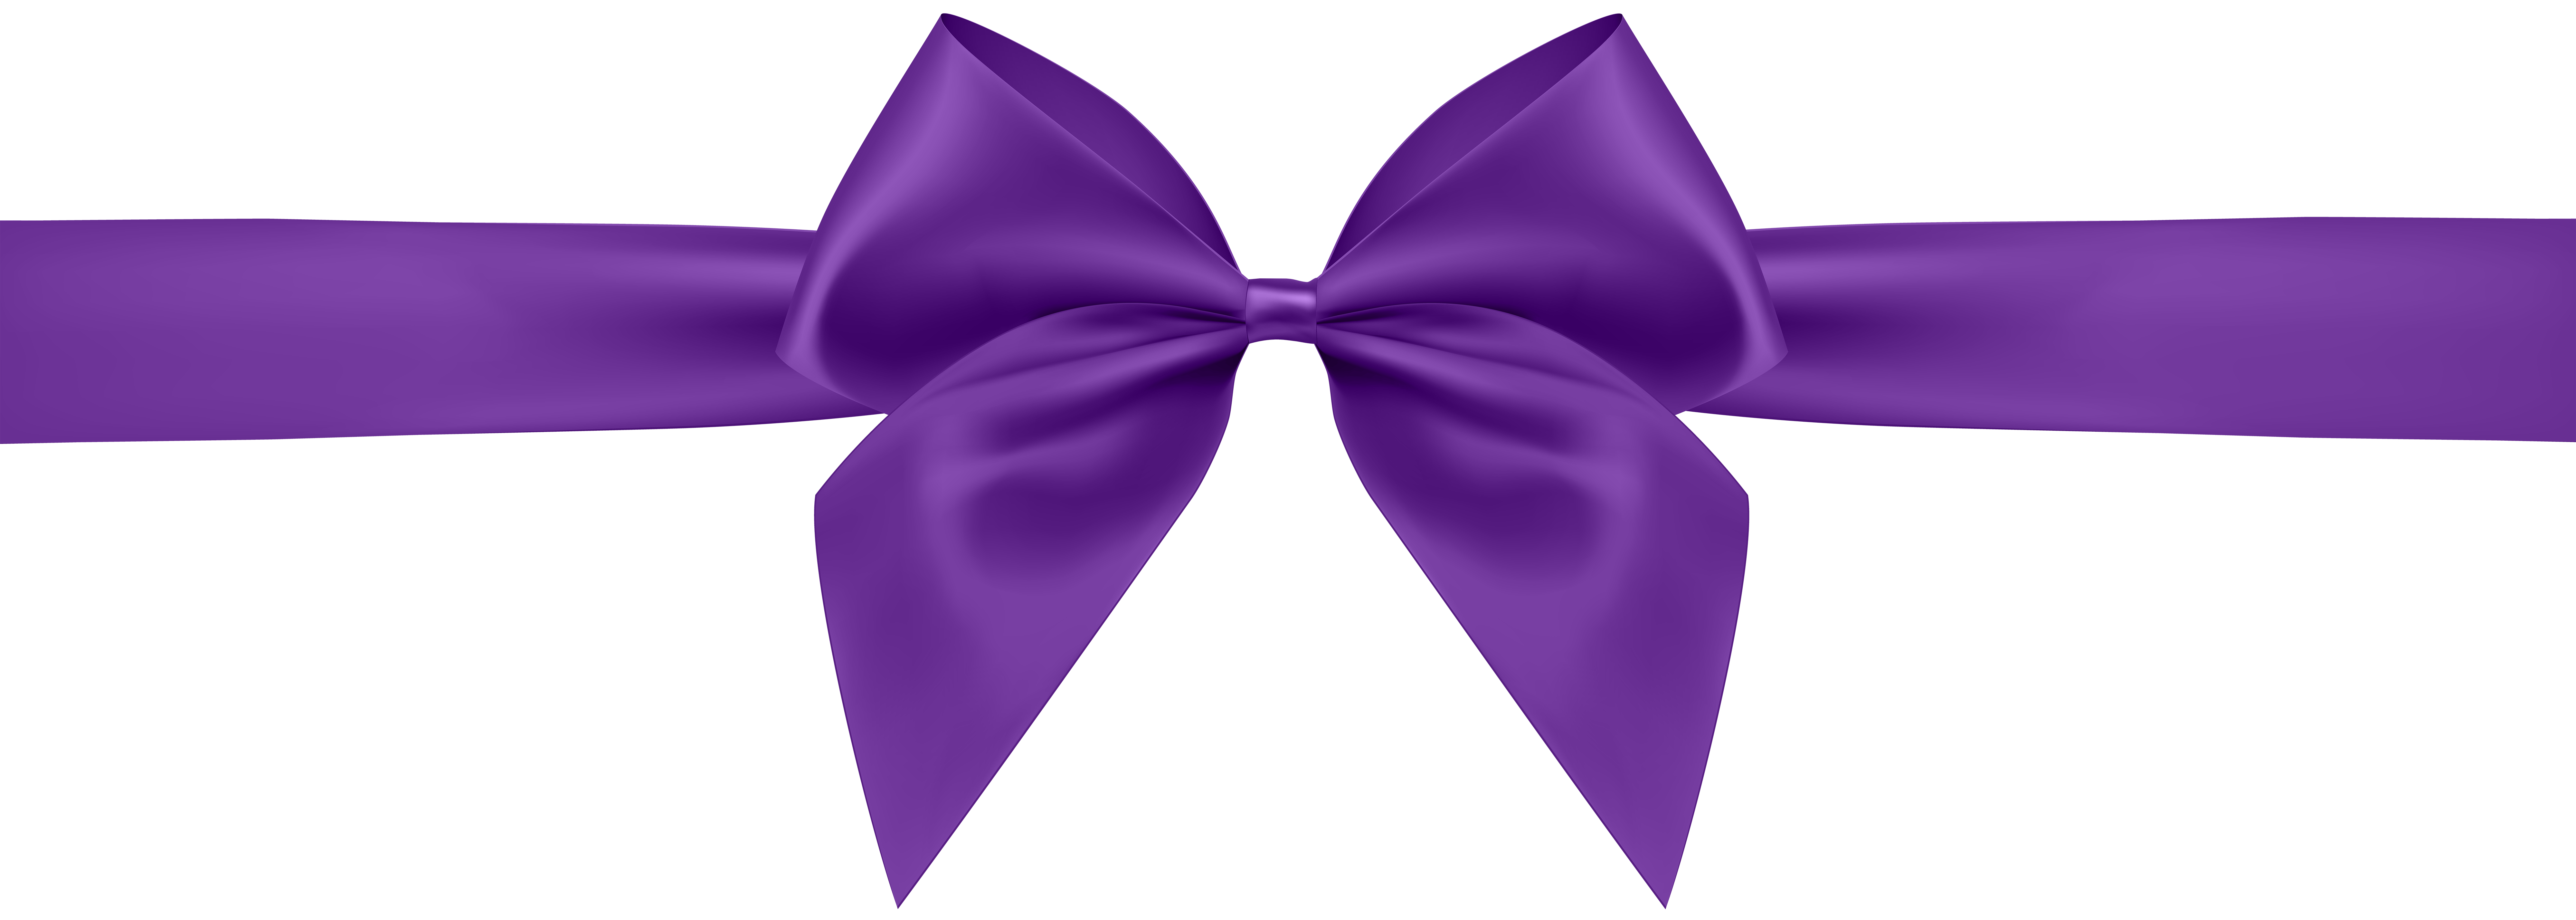 Purple Bow Transparent Clip Art Image | Gallery Yopriceville - High ...